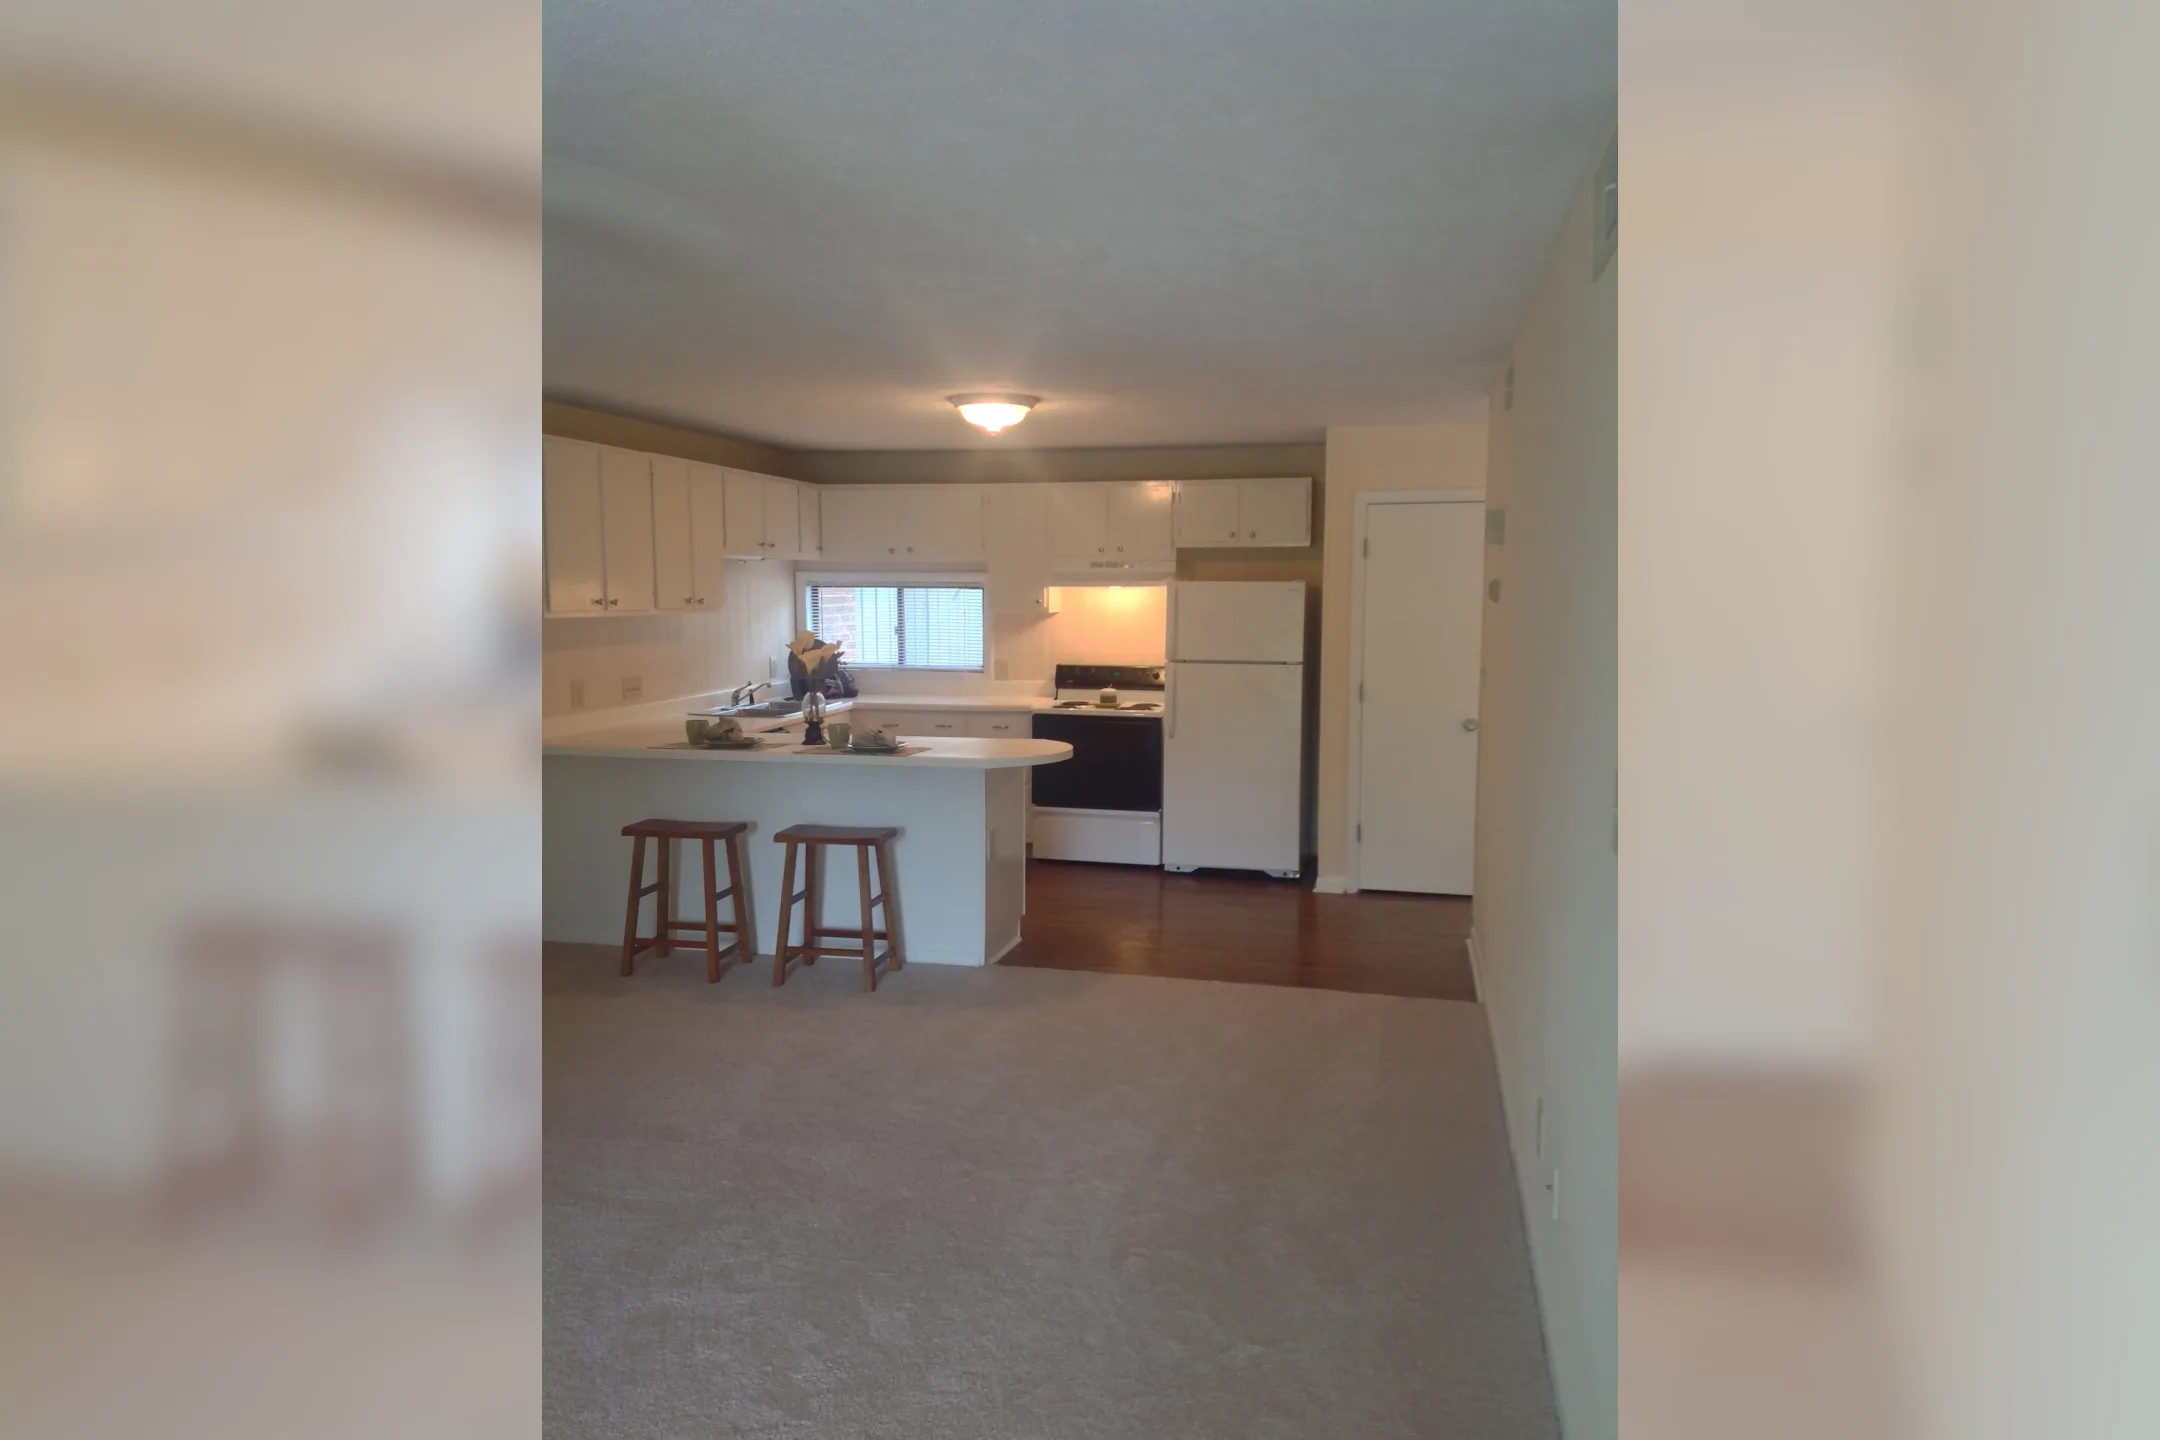 Kitchen - Lake Clair Apartments - Fayetteville, NC